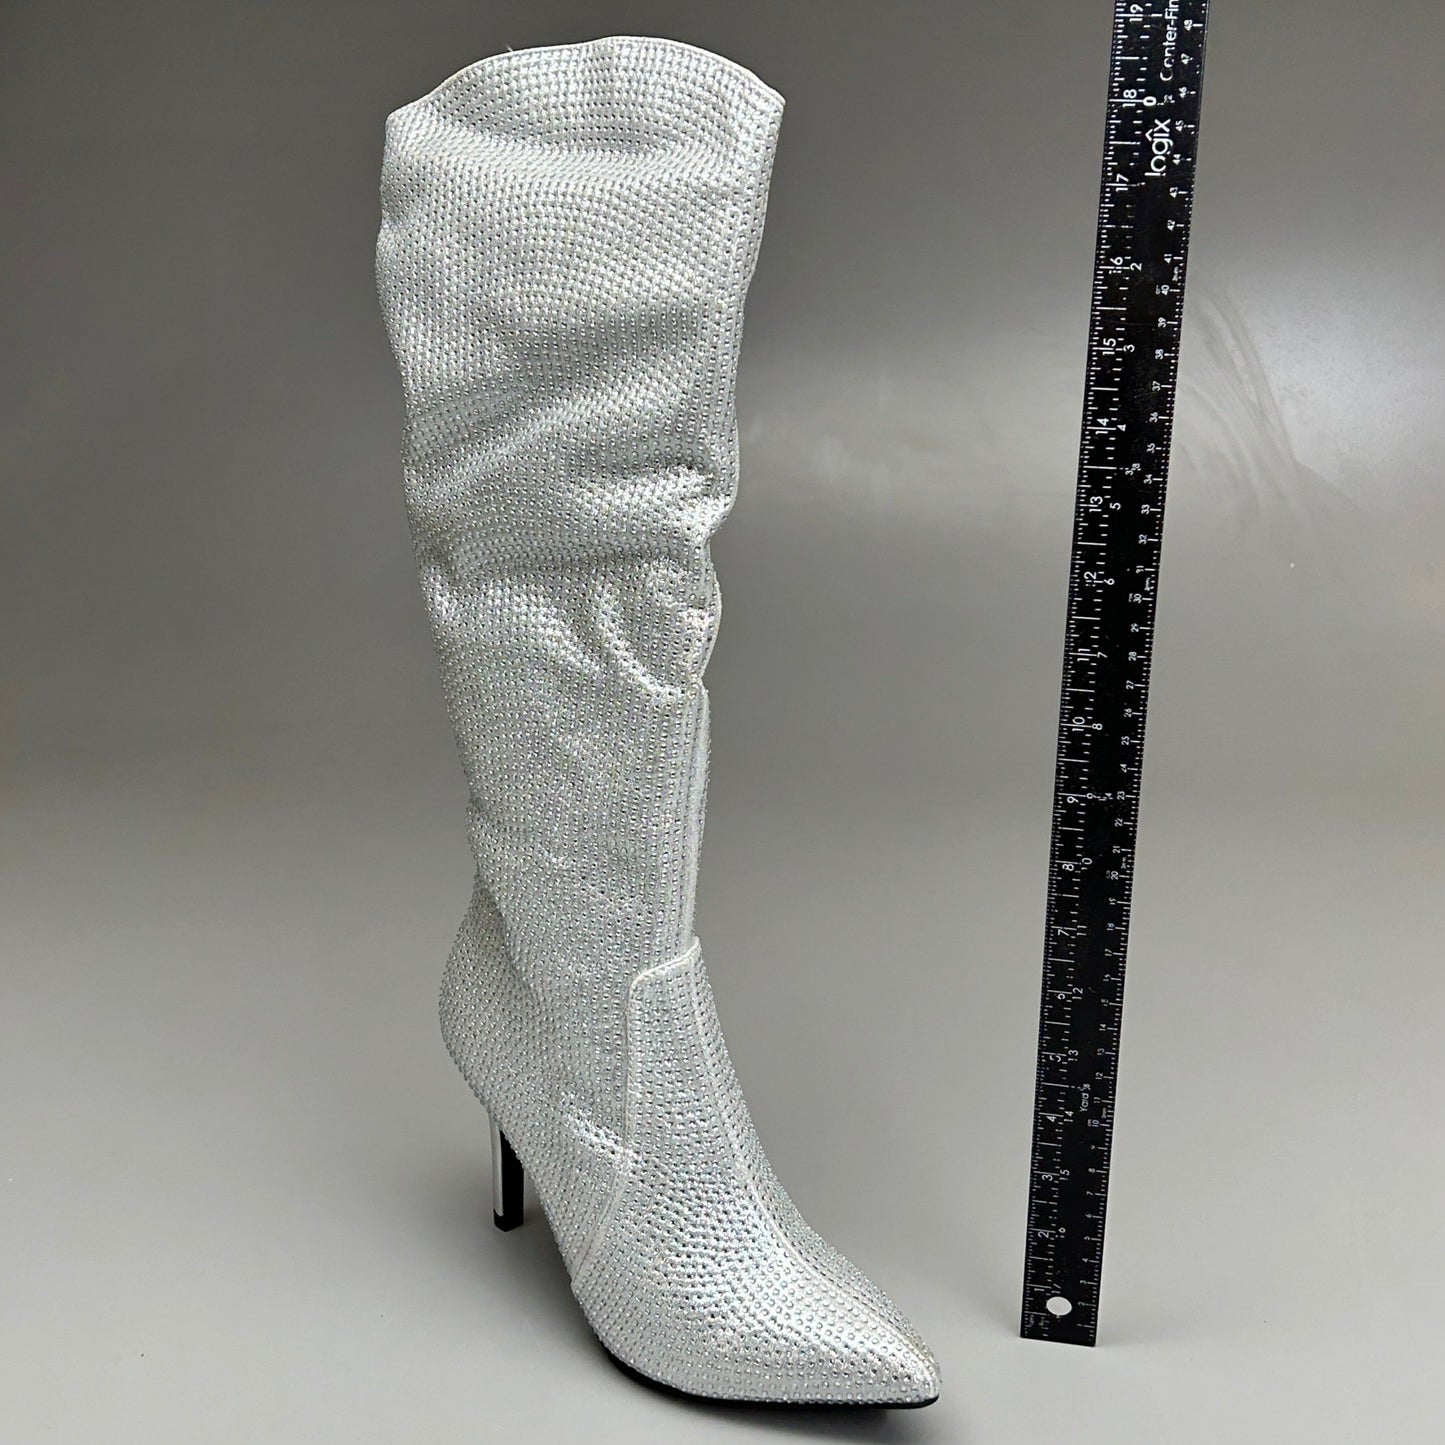 MIA Mackynzie Silver Stone Tall Heeled Boots Sz 7.5M Q100302